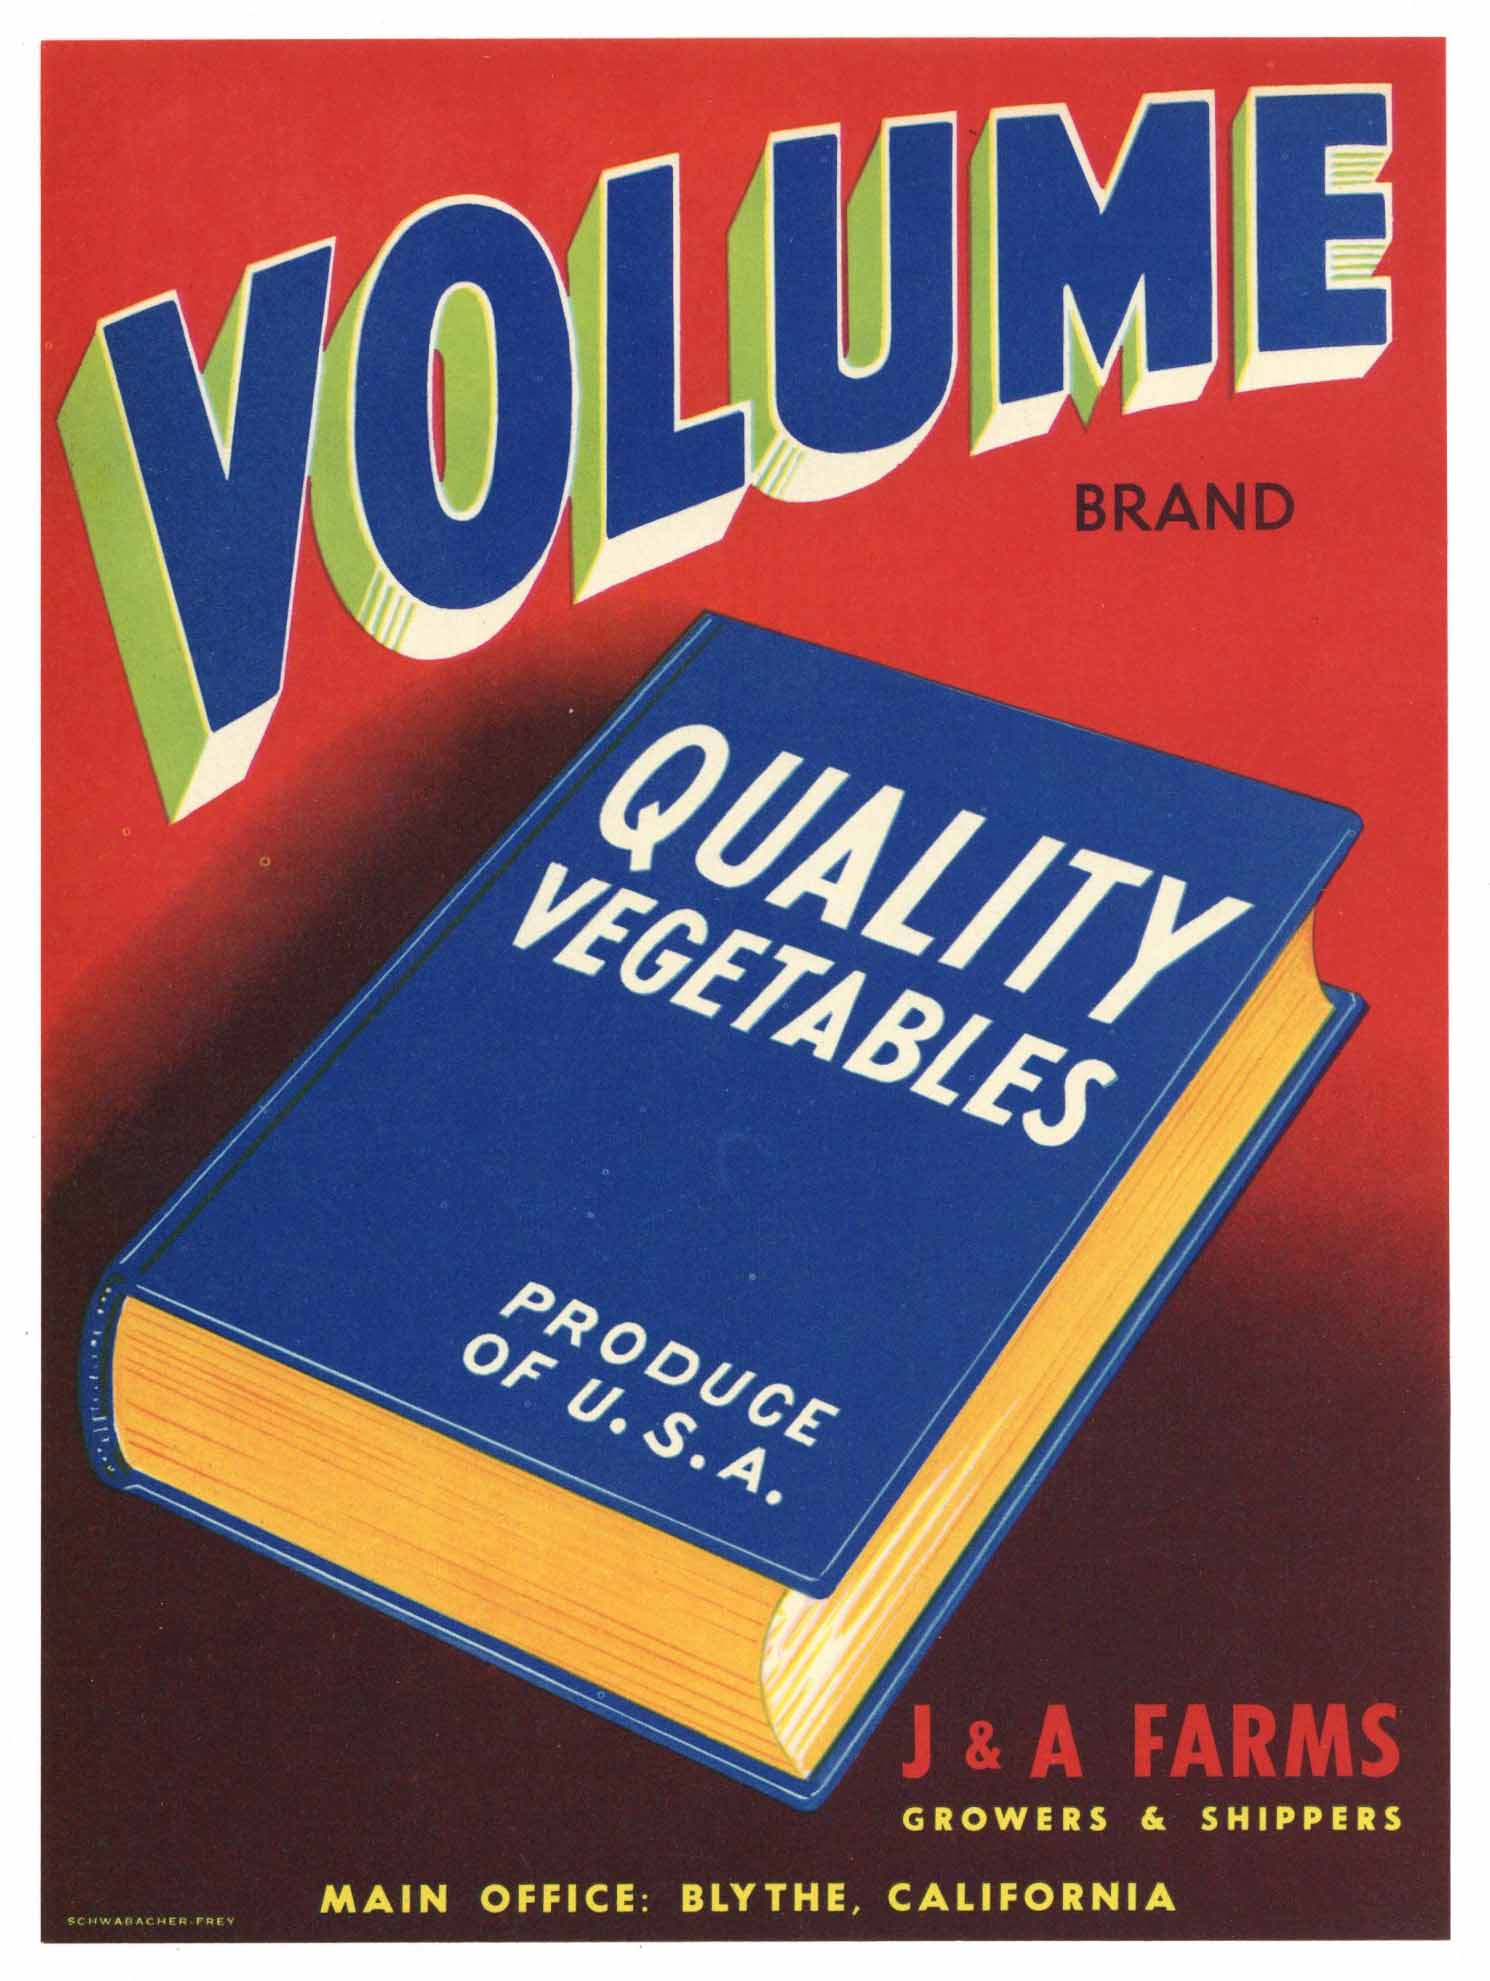 Volume Brand Vintage Vegetable Crate Label